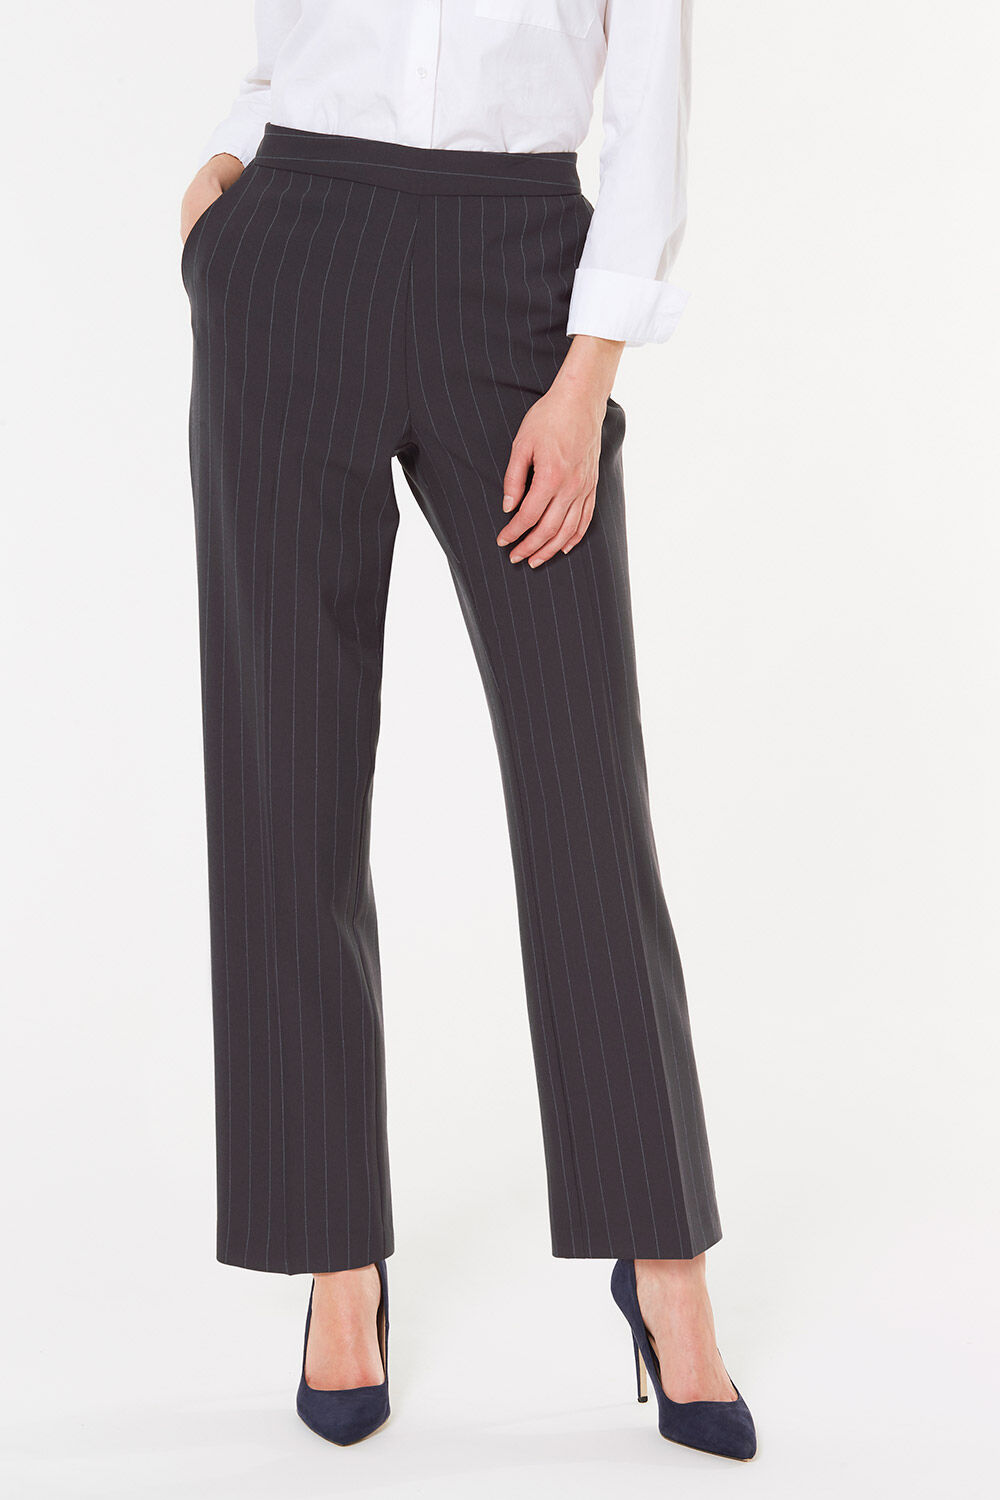 Bonmarche Straight Leg Stripe Pull On Trouser - Navy, Size: 28